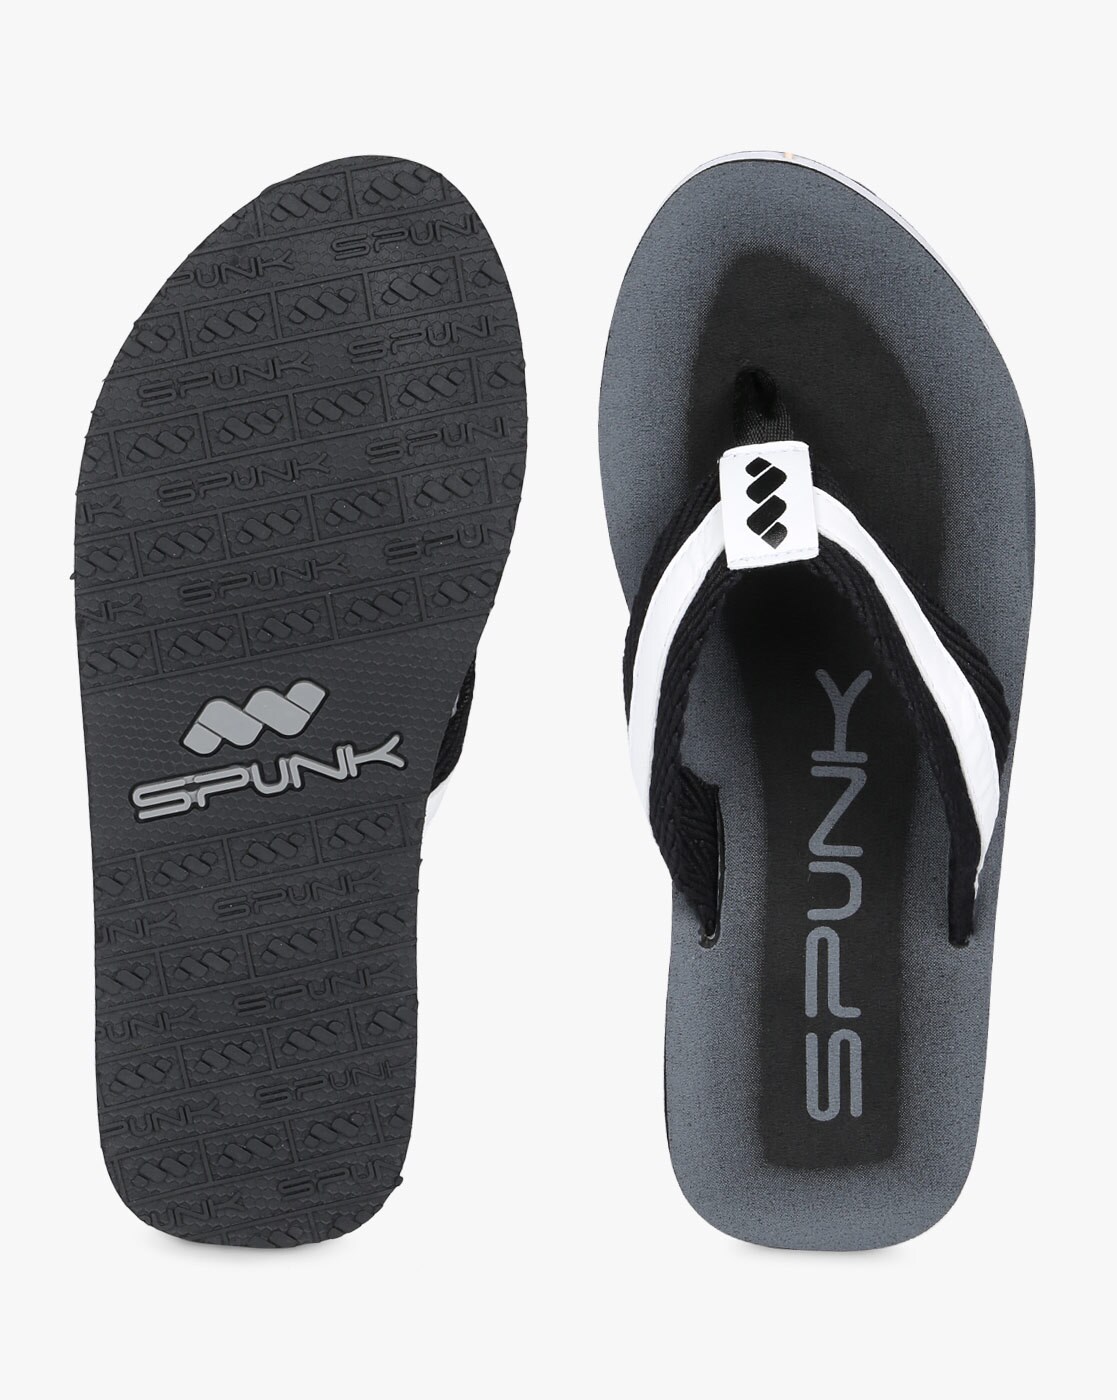 spunk slippers